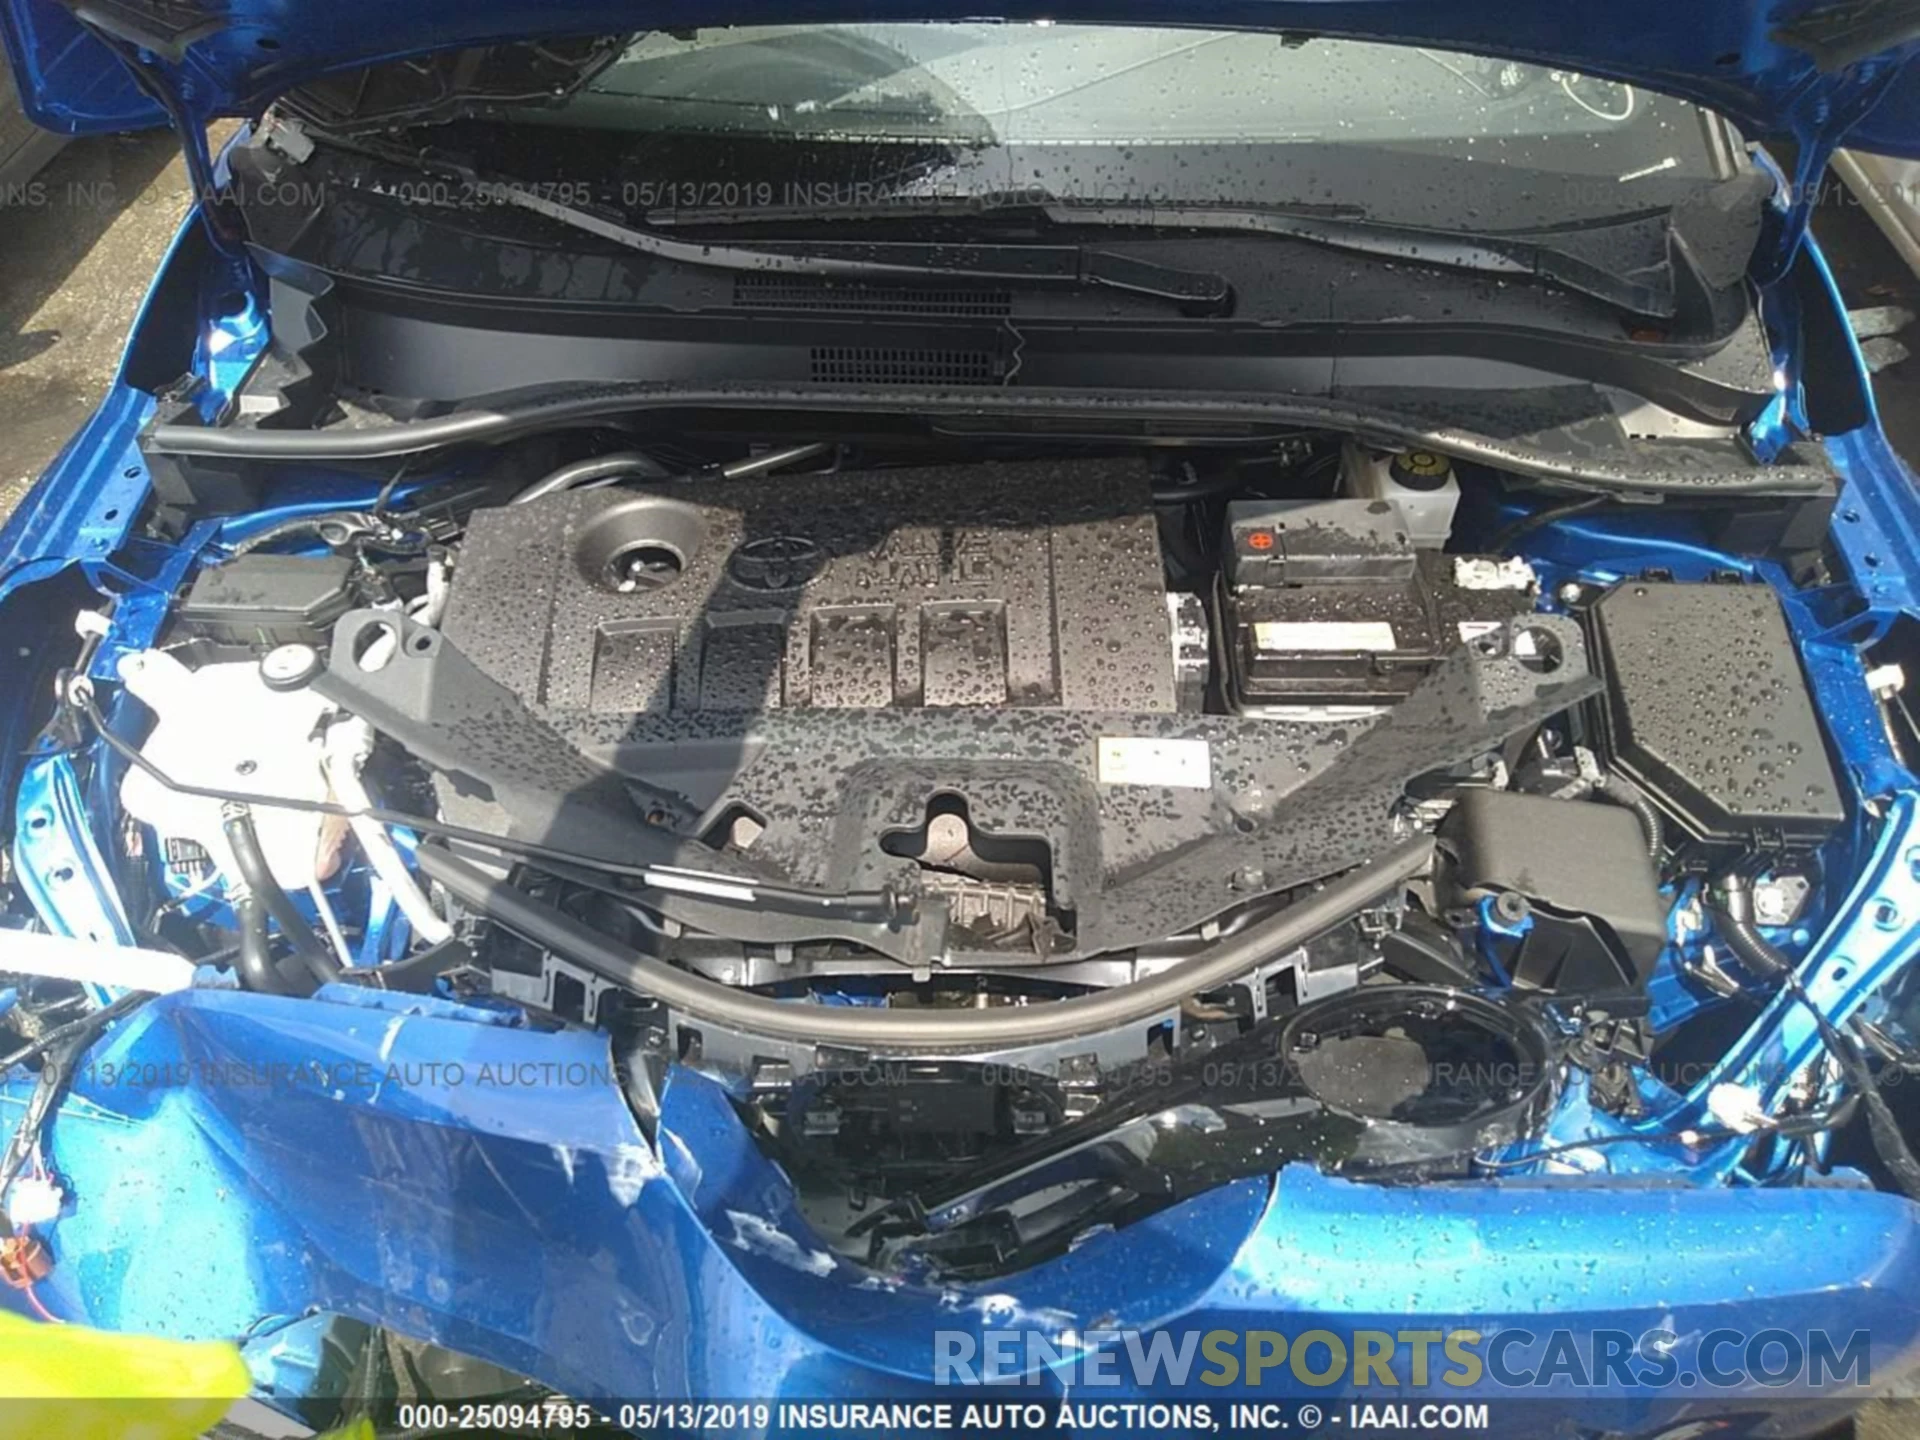 10 Photograph of a damaged car NMTKHMBX3KR075583 TOYOTA C-HR 2019